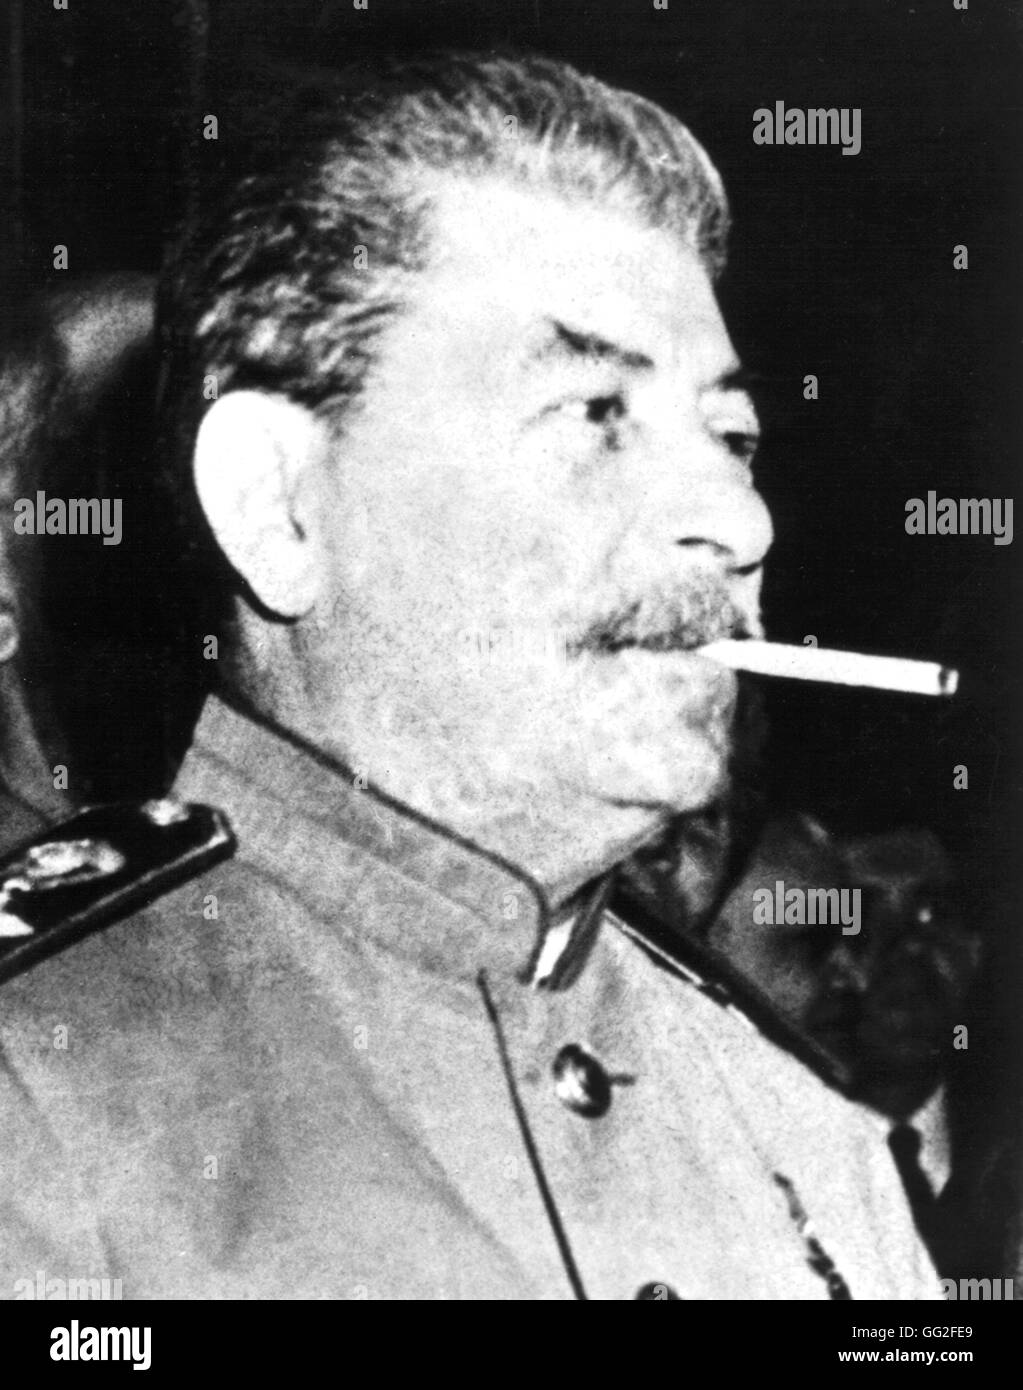 Portrait of Joseph Stalin 20th century U.S.S.R. Stock Photo